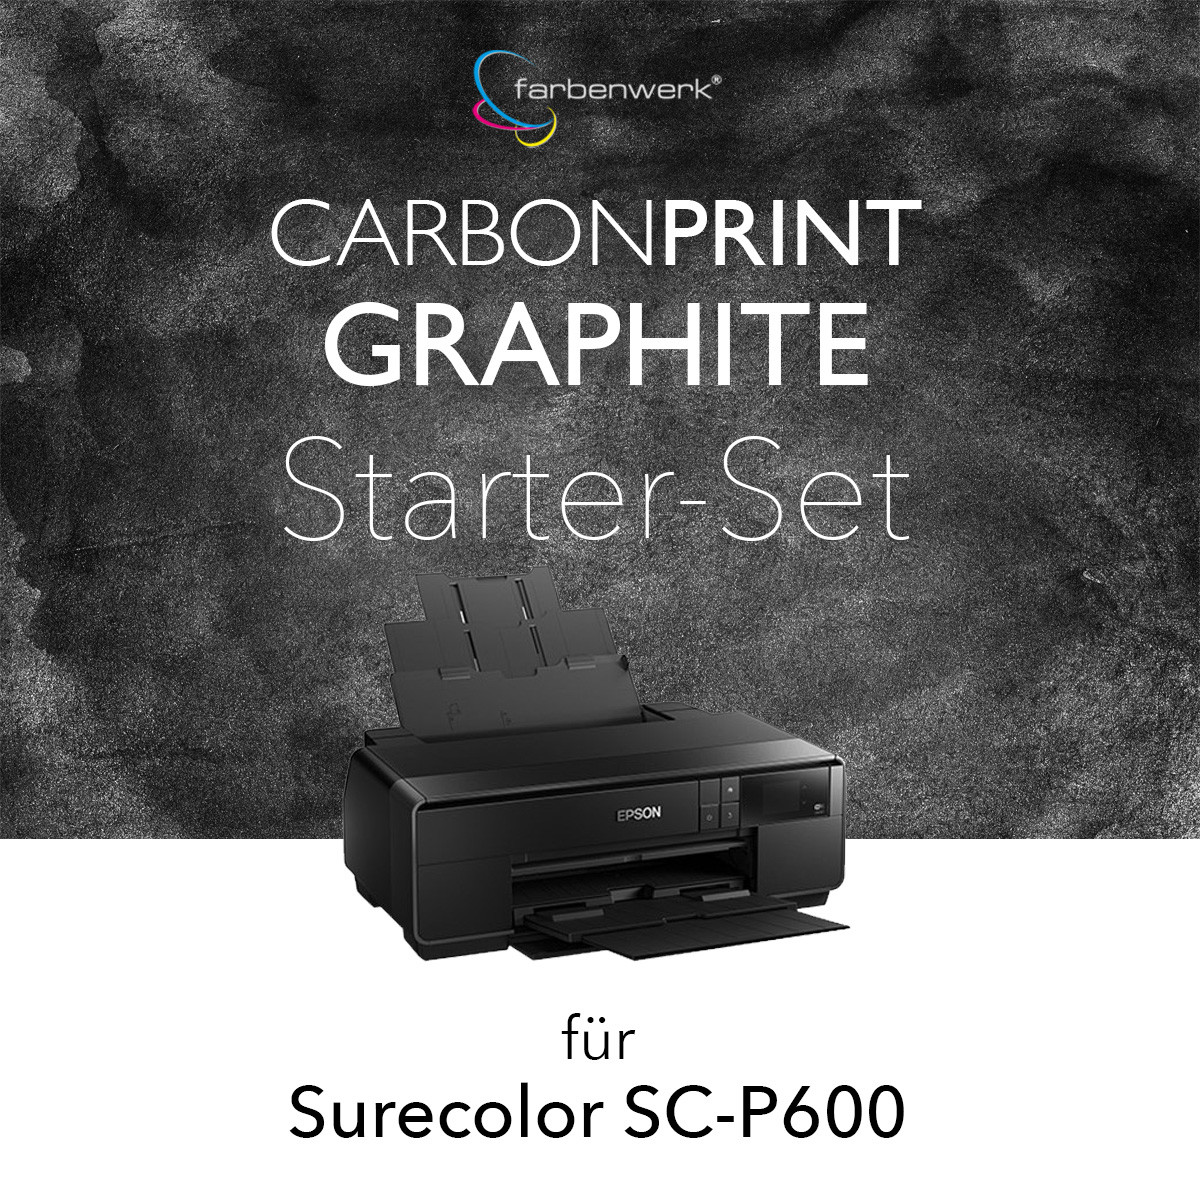 Starter-Set Carbonprint Graphite for SC-P600